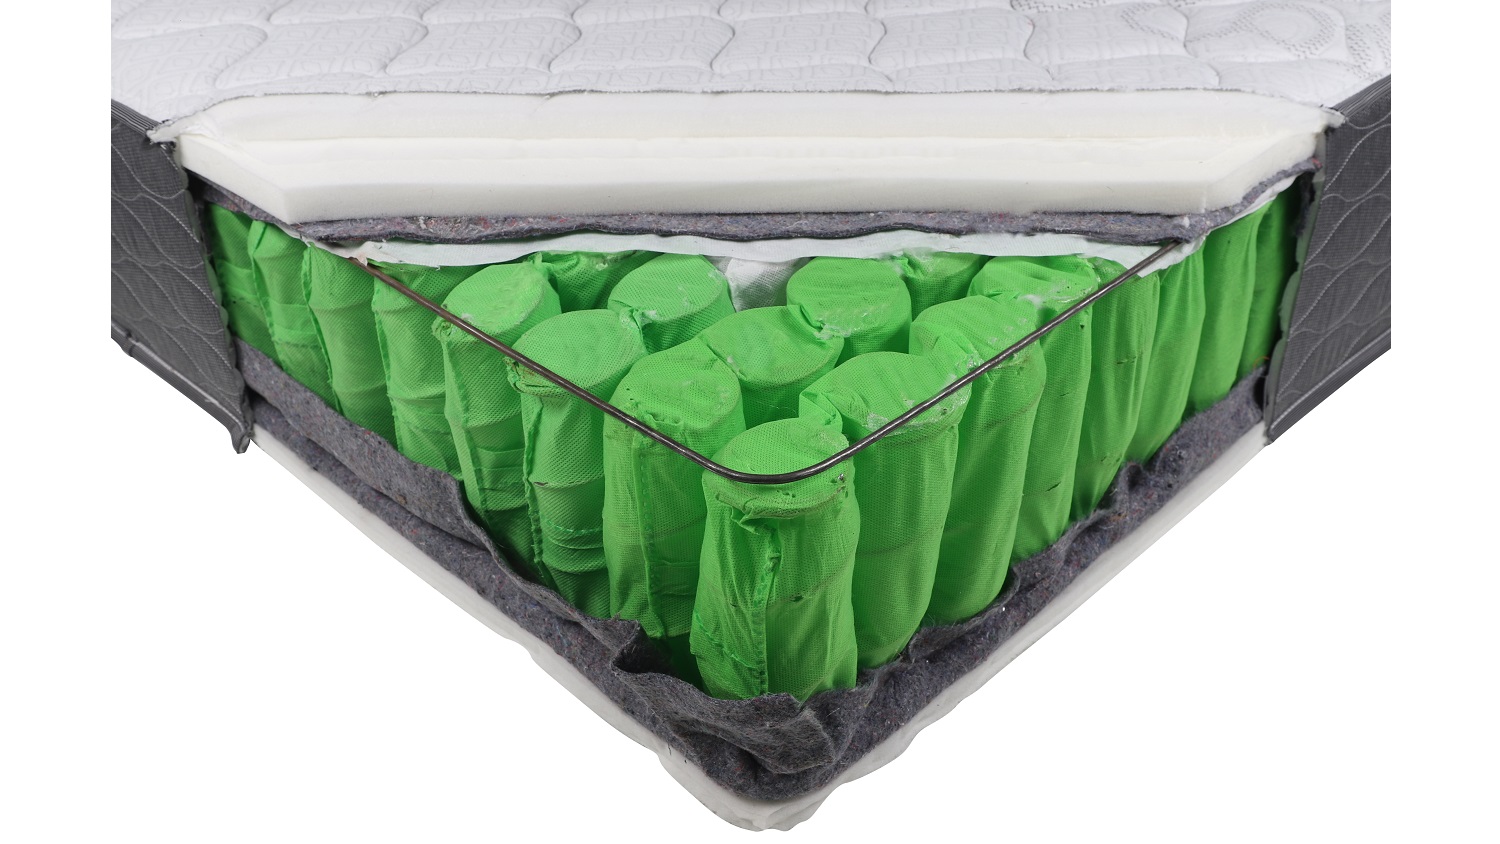 king koil conforma element mattress review